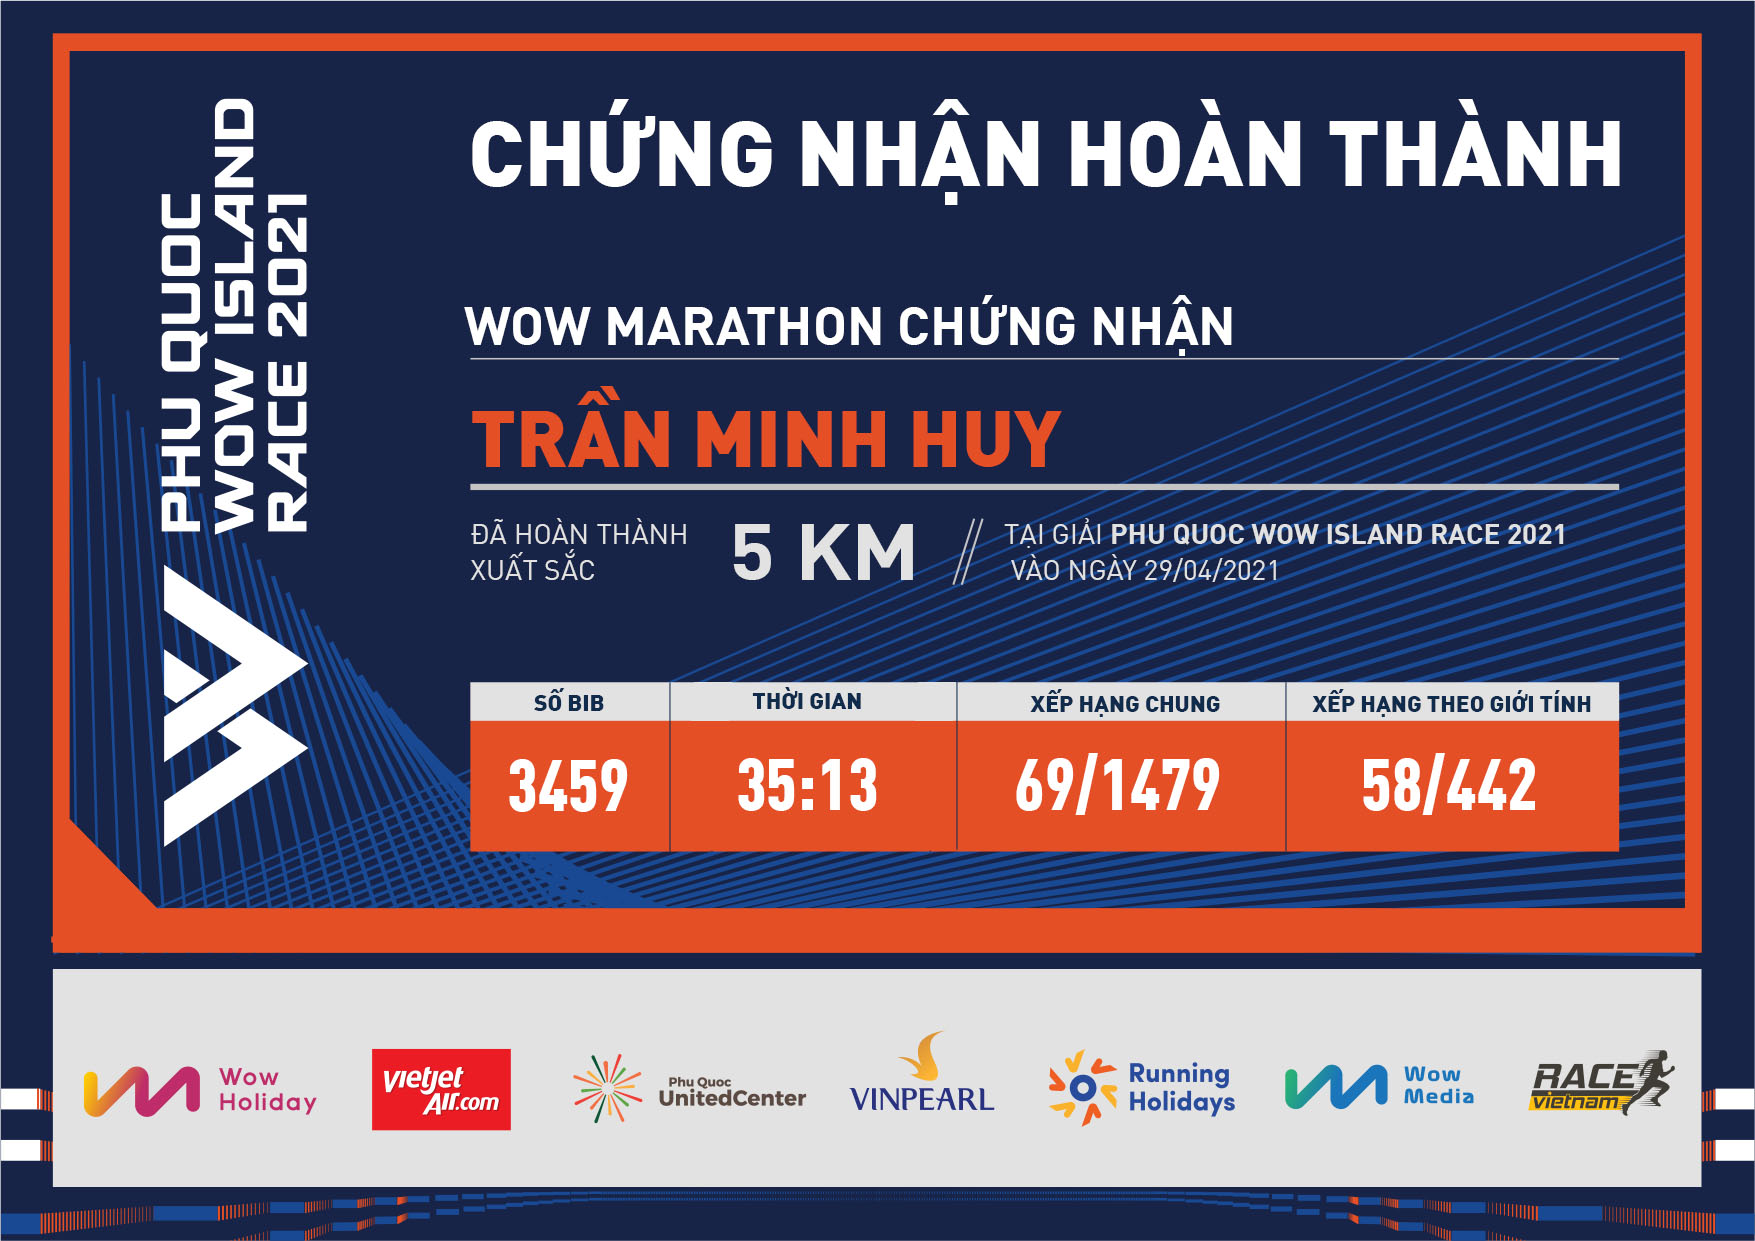 3459 - Trần Minh Huy